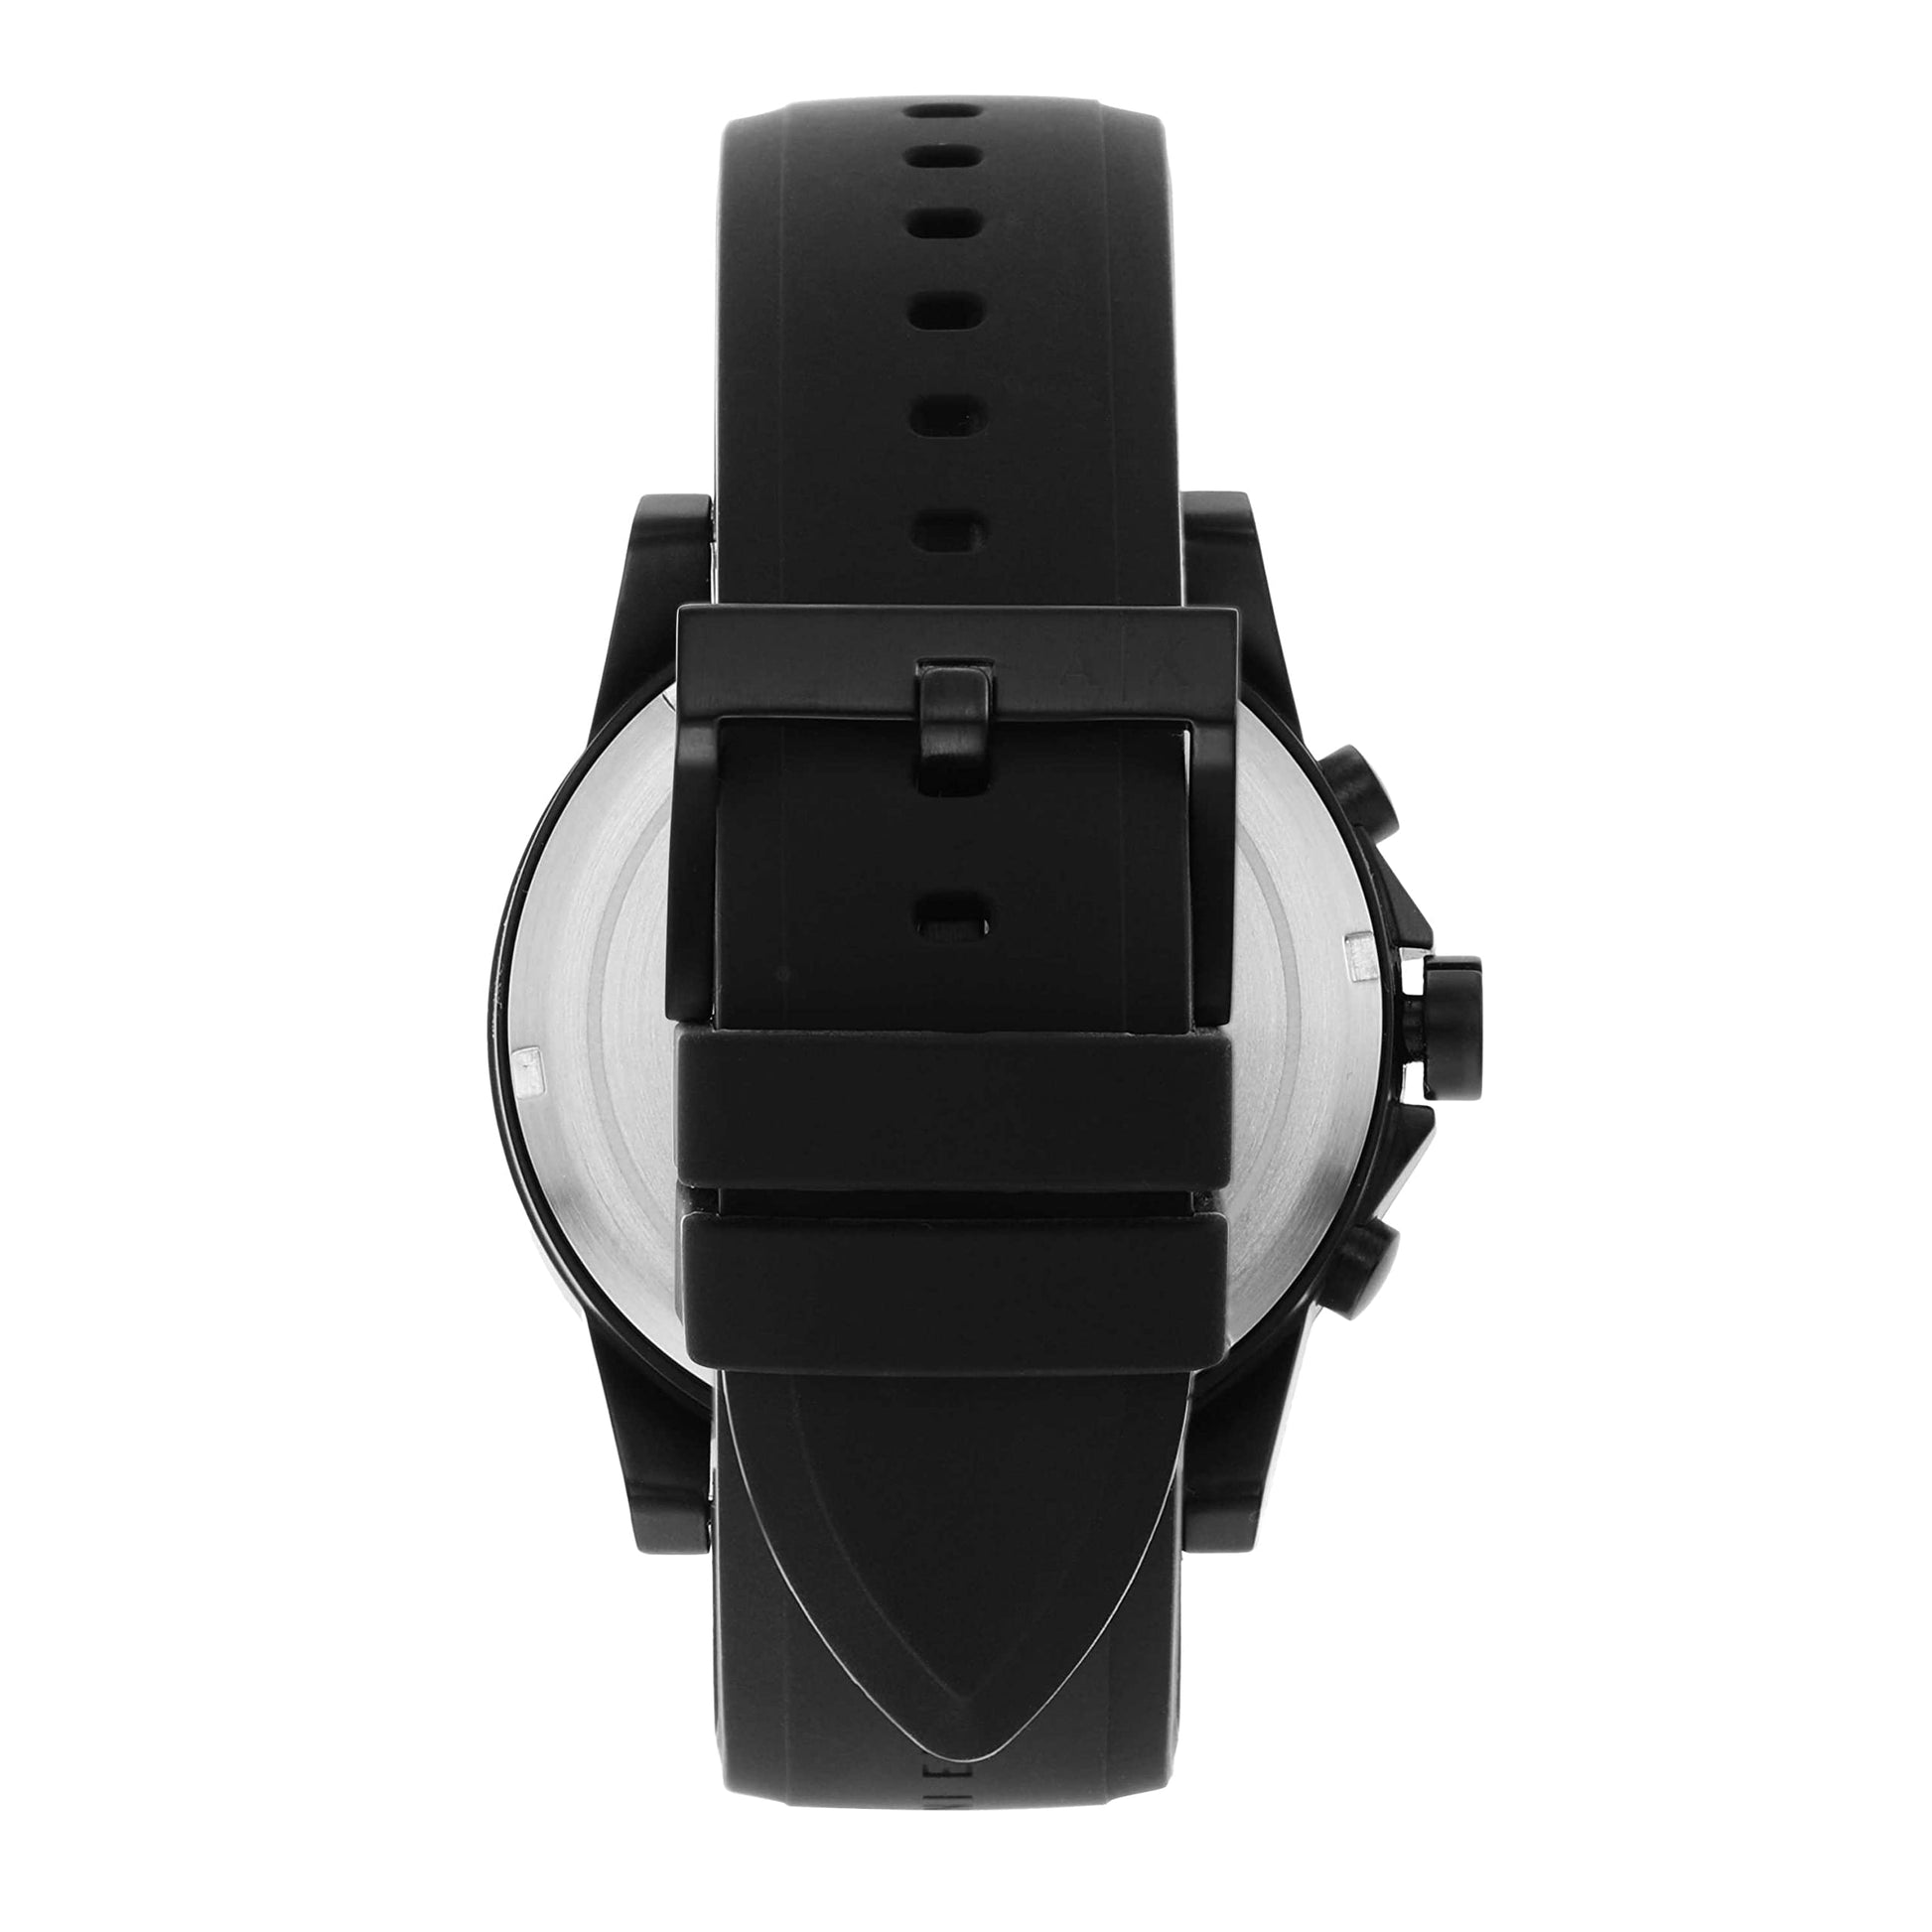 Armani Exchange Analog Black Dial Men's Watch-AX1343 - Blossom Mantra